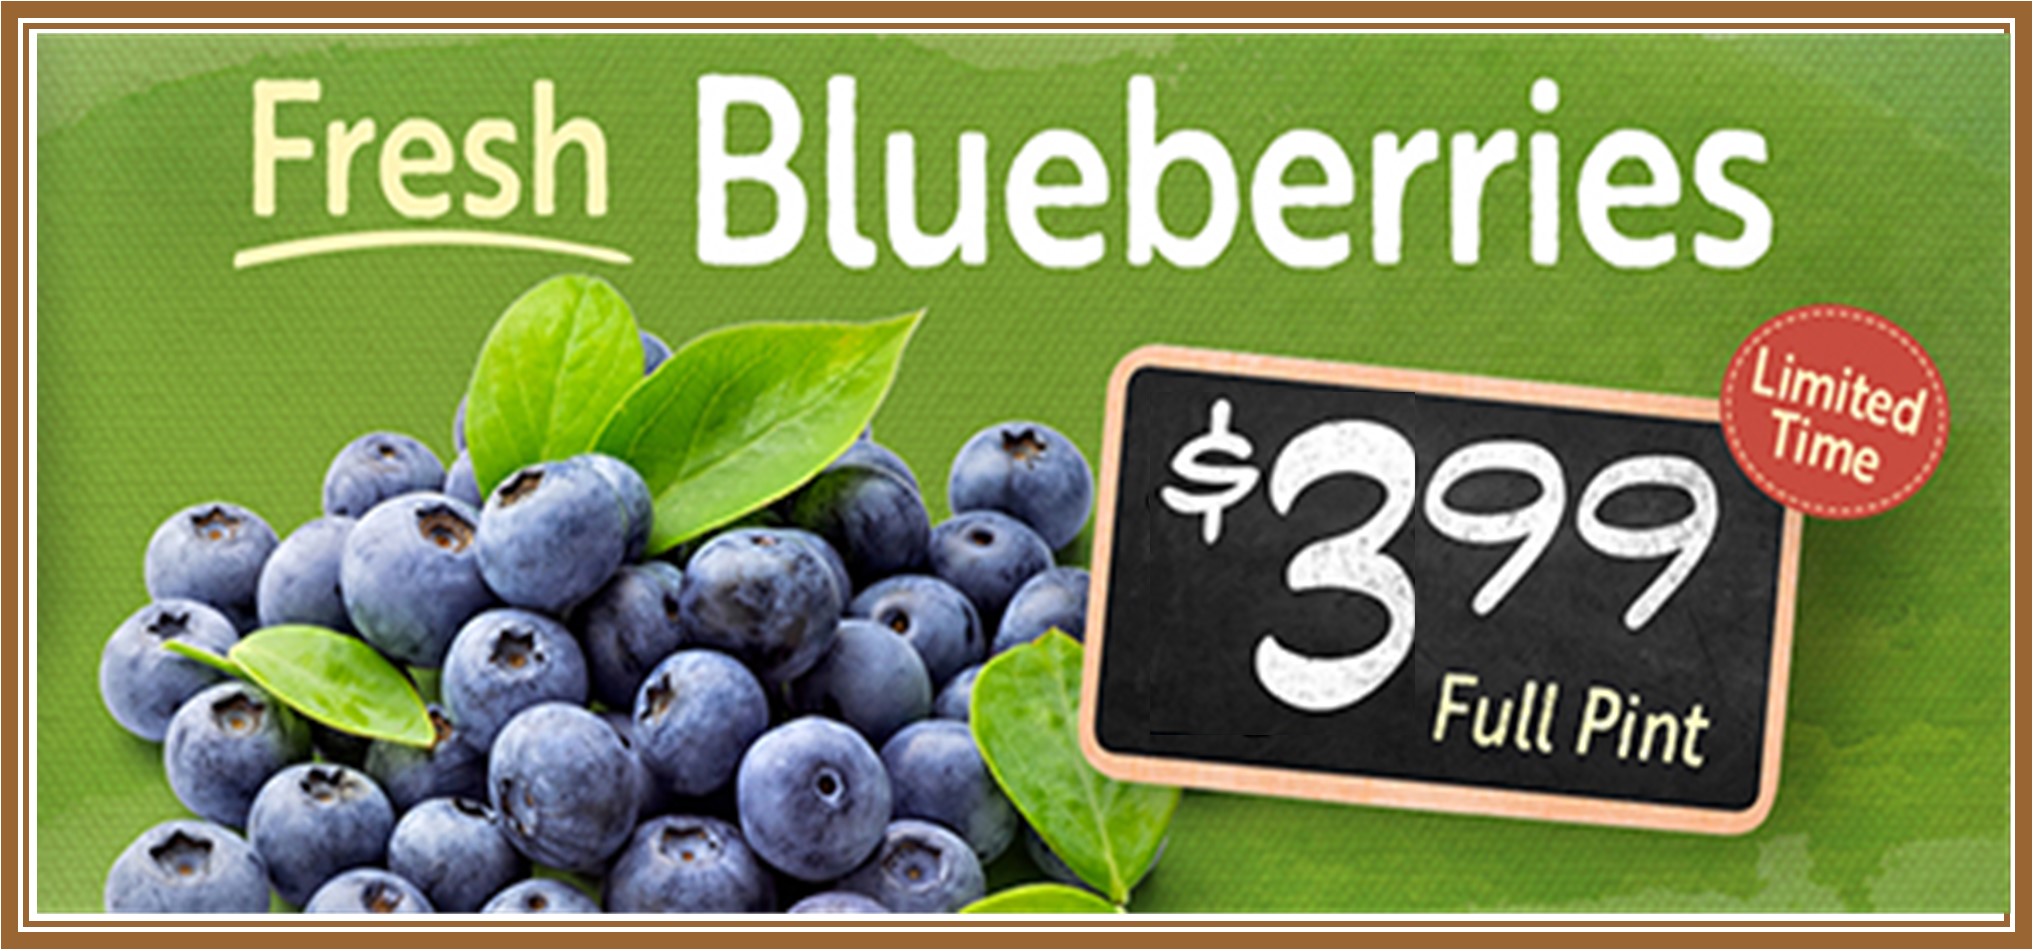 Blueberries 399.jpg